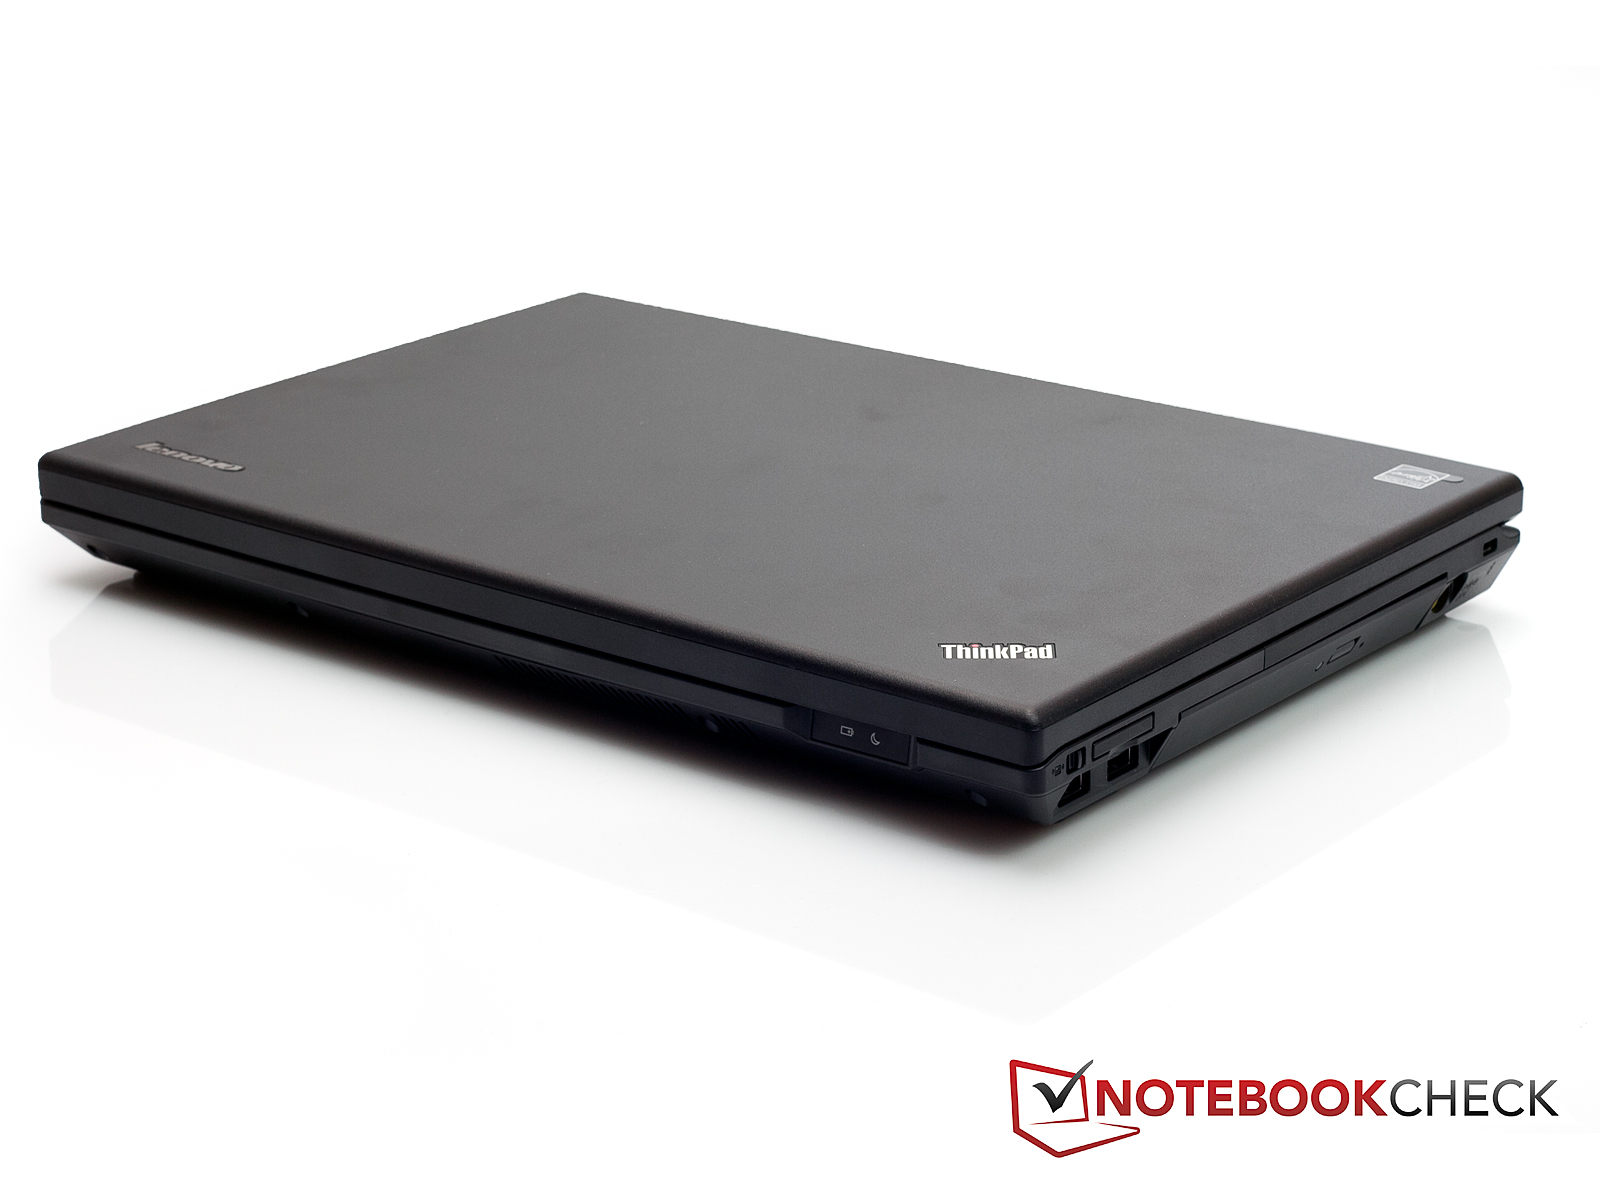 Lenovo thinkpad l420 notebookcheck nba trade machine